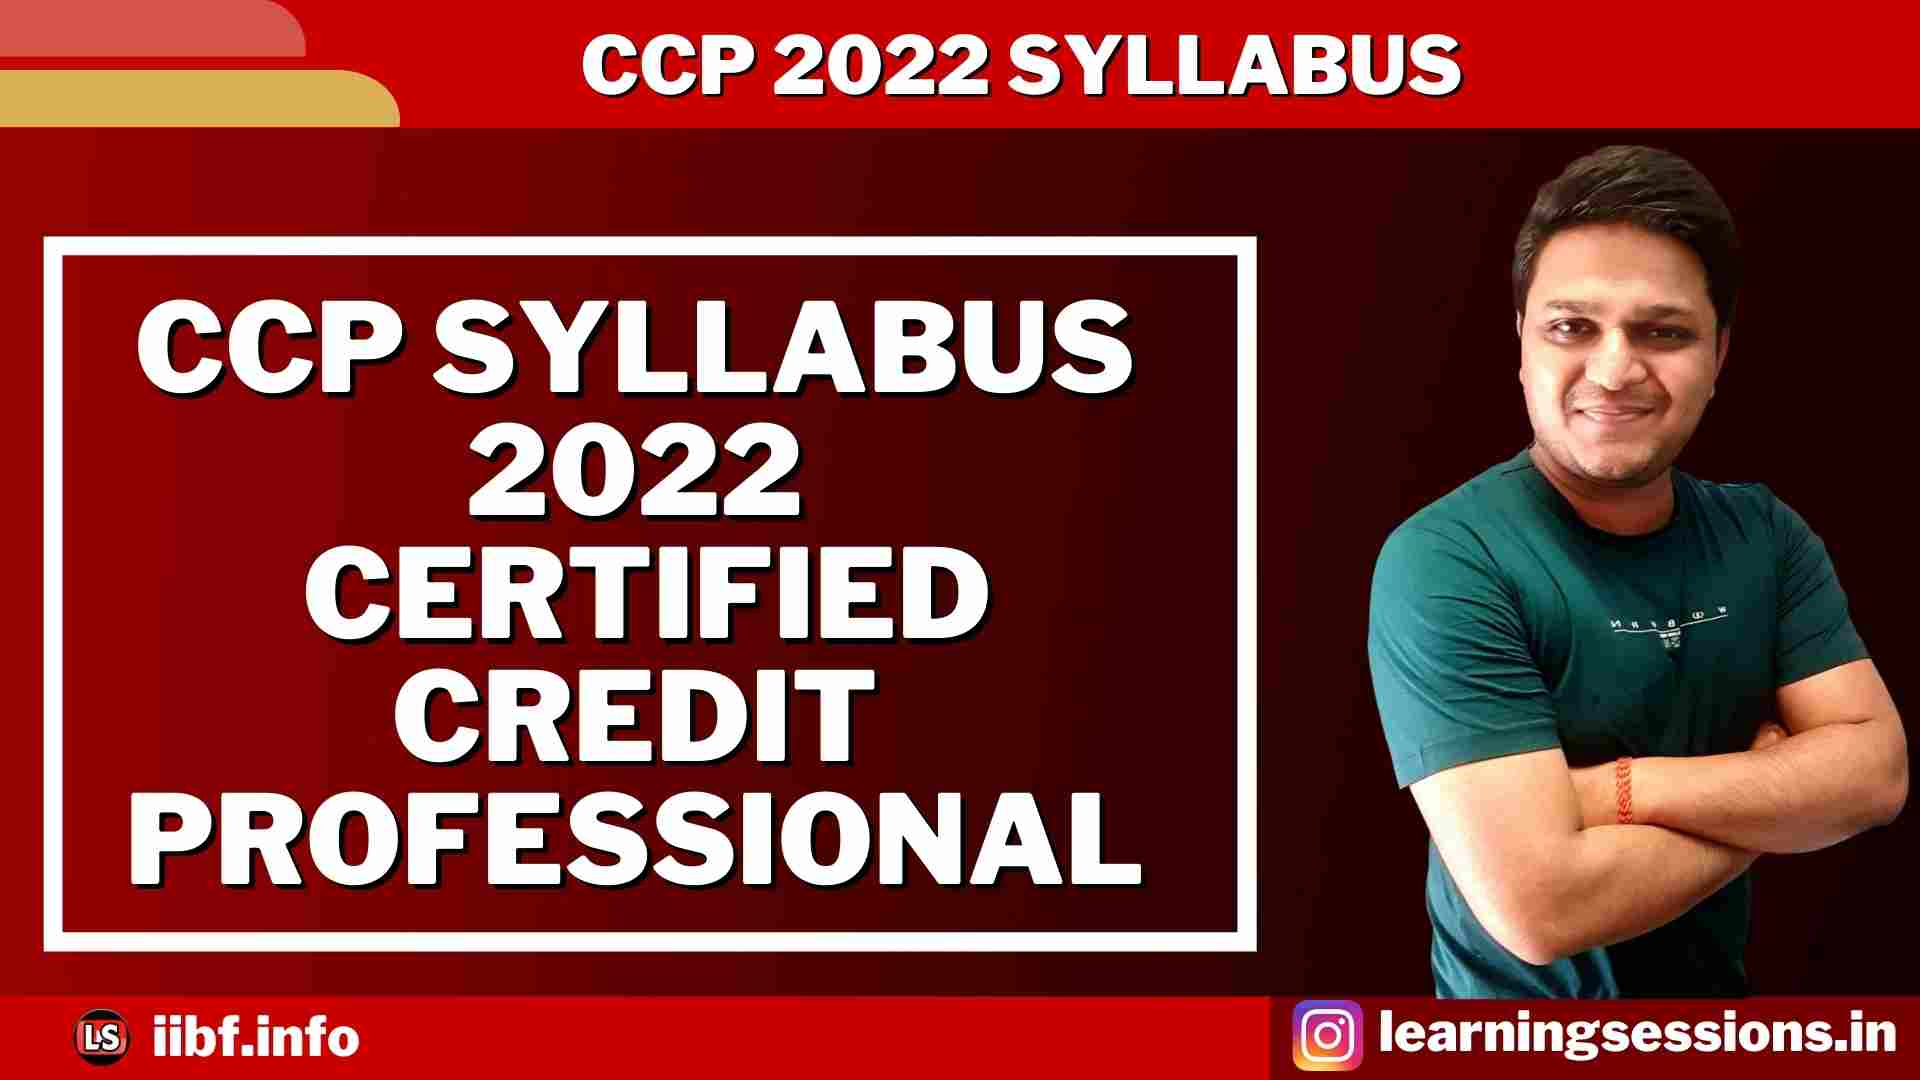 CCP SYLLABUS 2022 – CERTIFIED CREDIT PROFESSIONAL